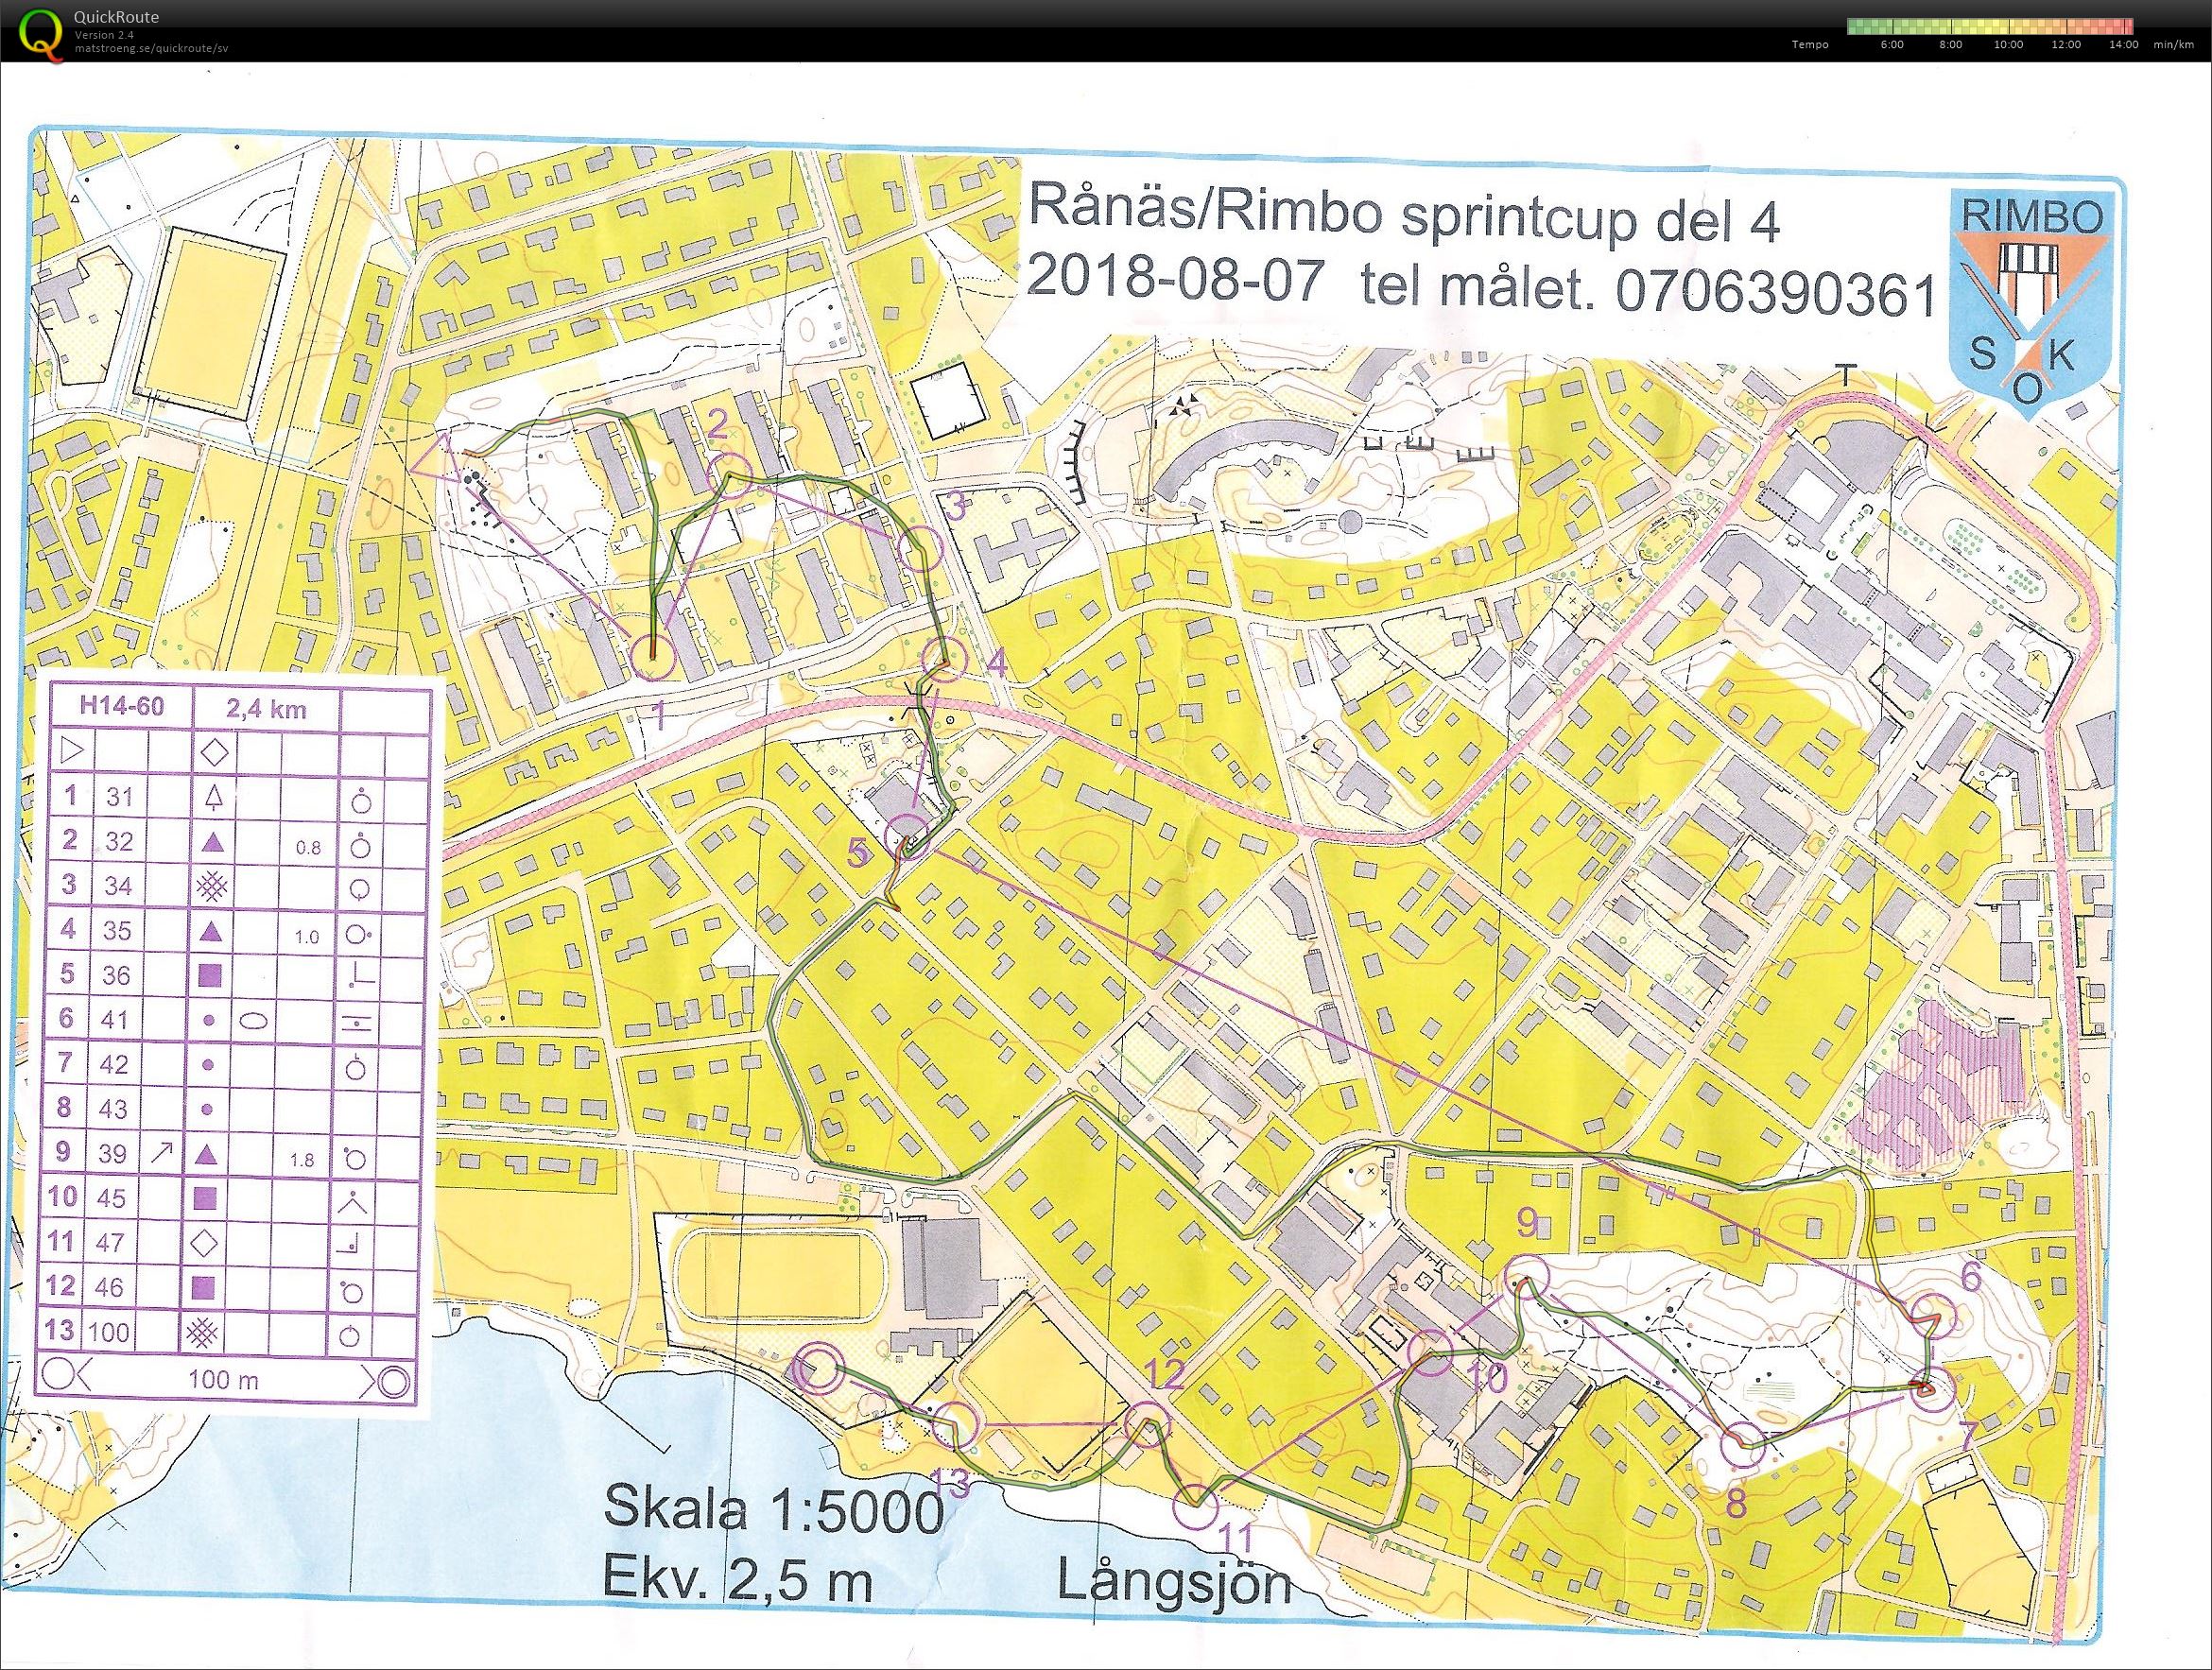 Rånäs/Rimbo sprintcup Final (07-08-2018)